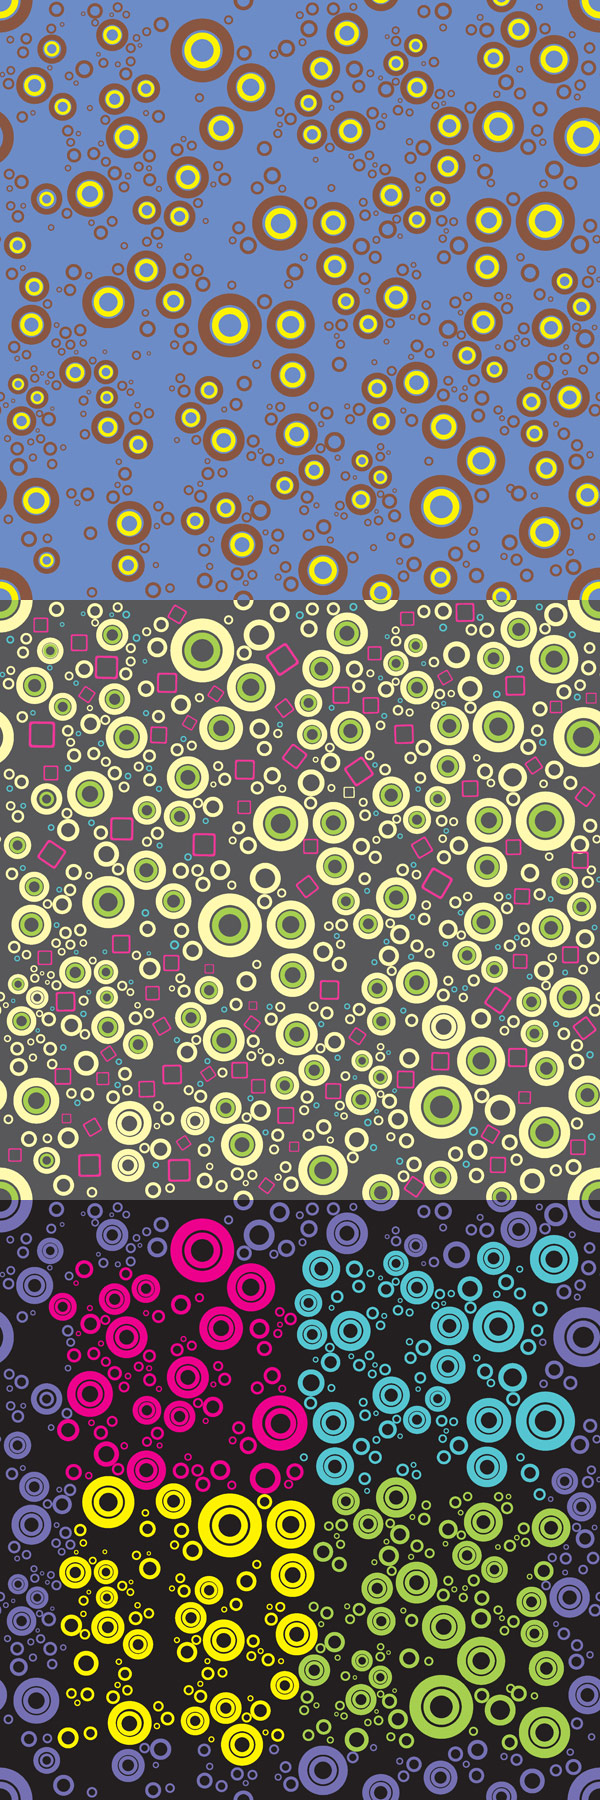 texture pattern dot circular circle background annular 